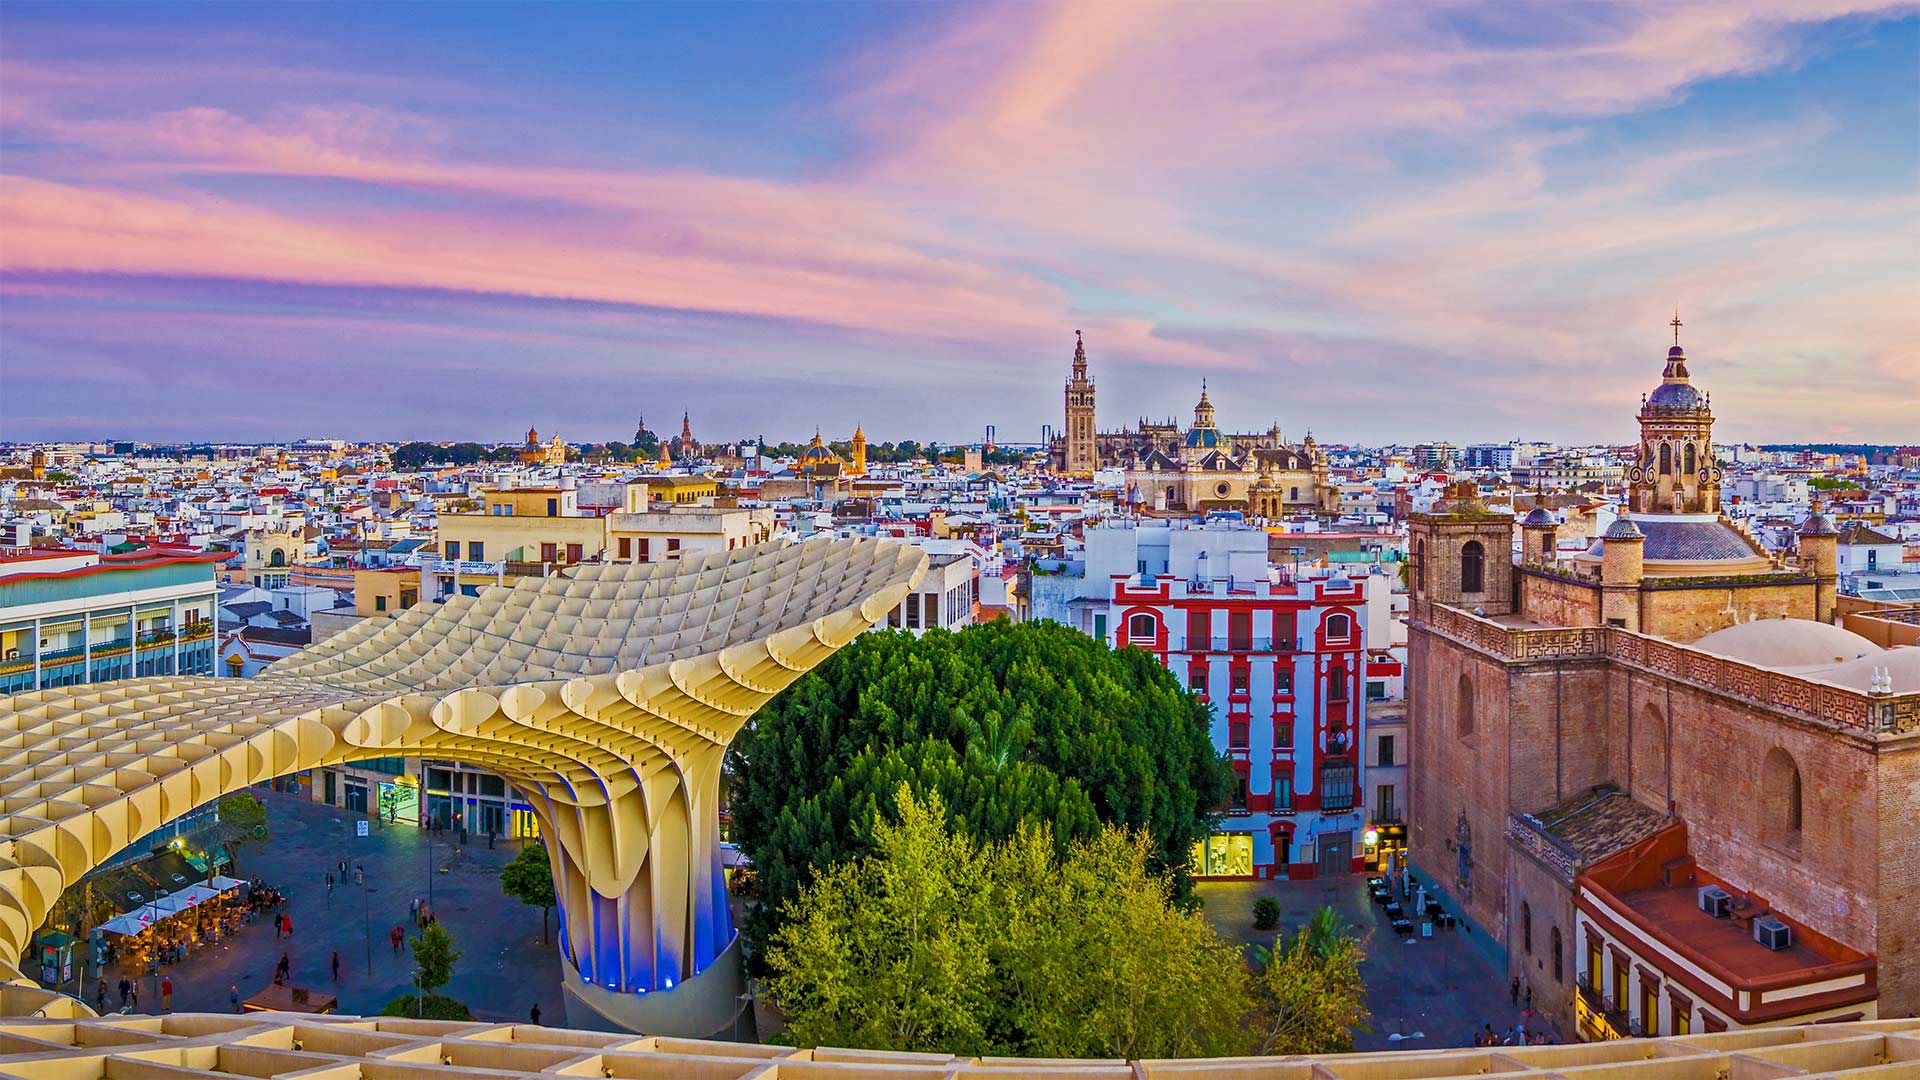 View of the city from the Setas de Sevilla (Metropol Parasol) in Seville, Spain - LucVi/Shutterstock)